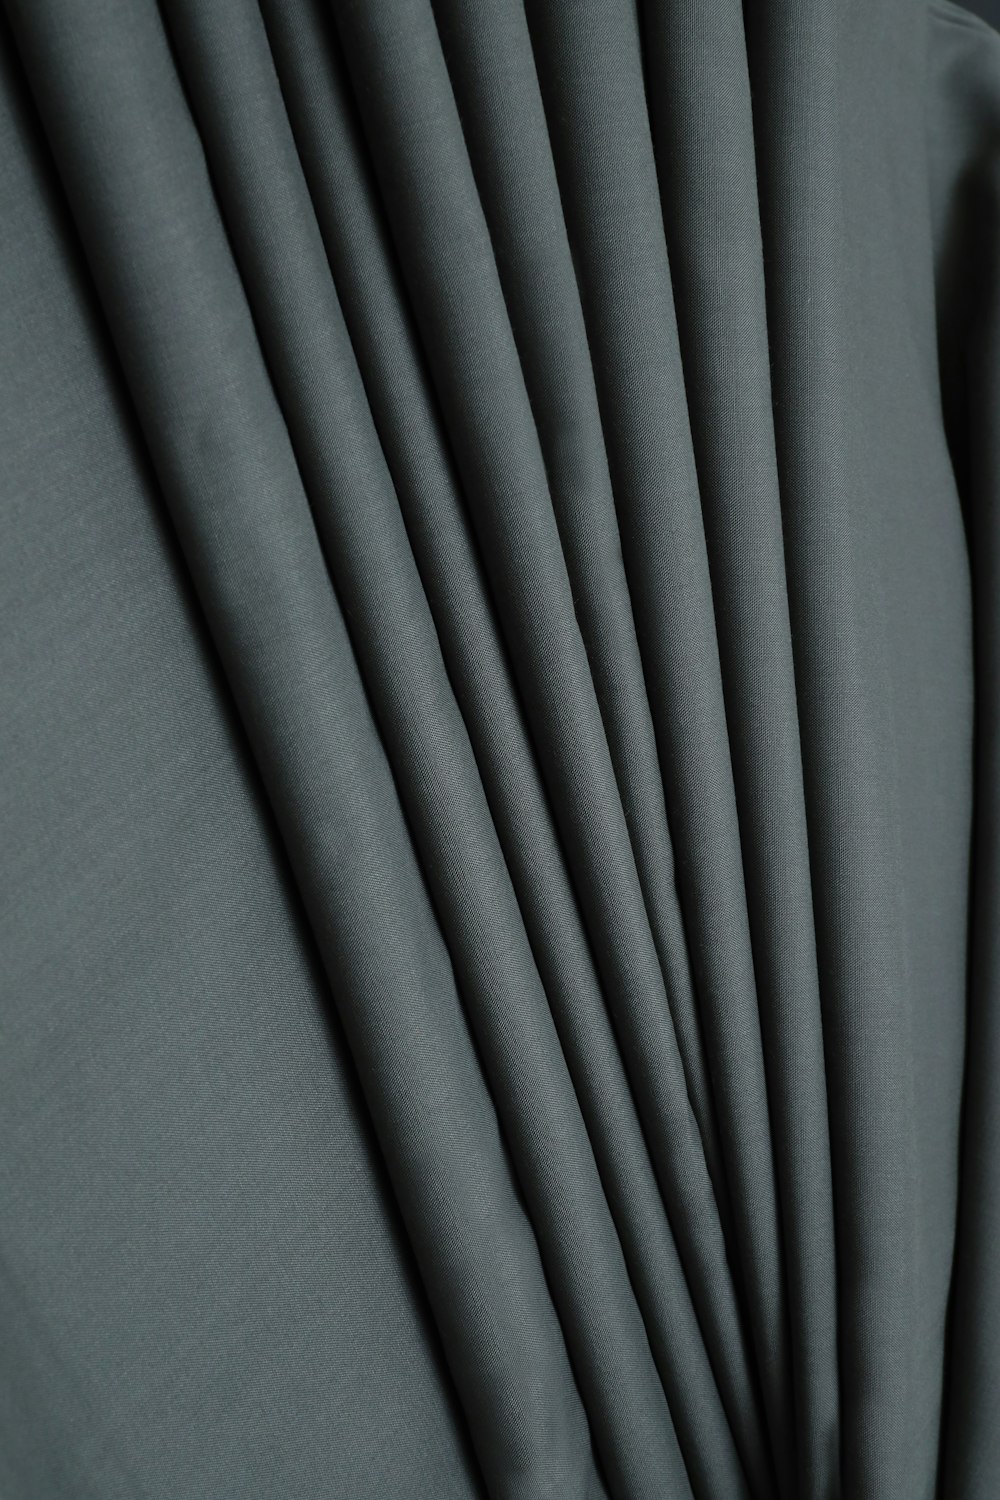 a close up of a grey fabric